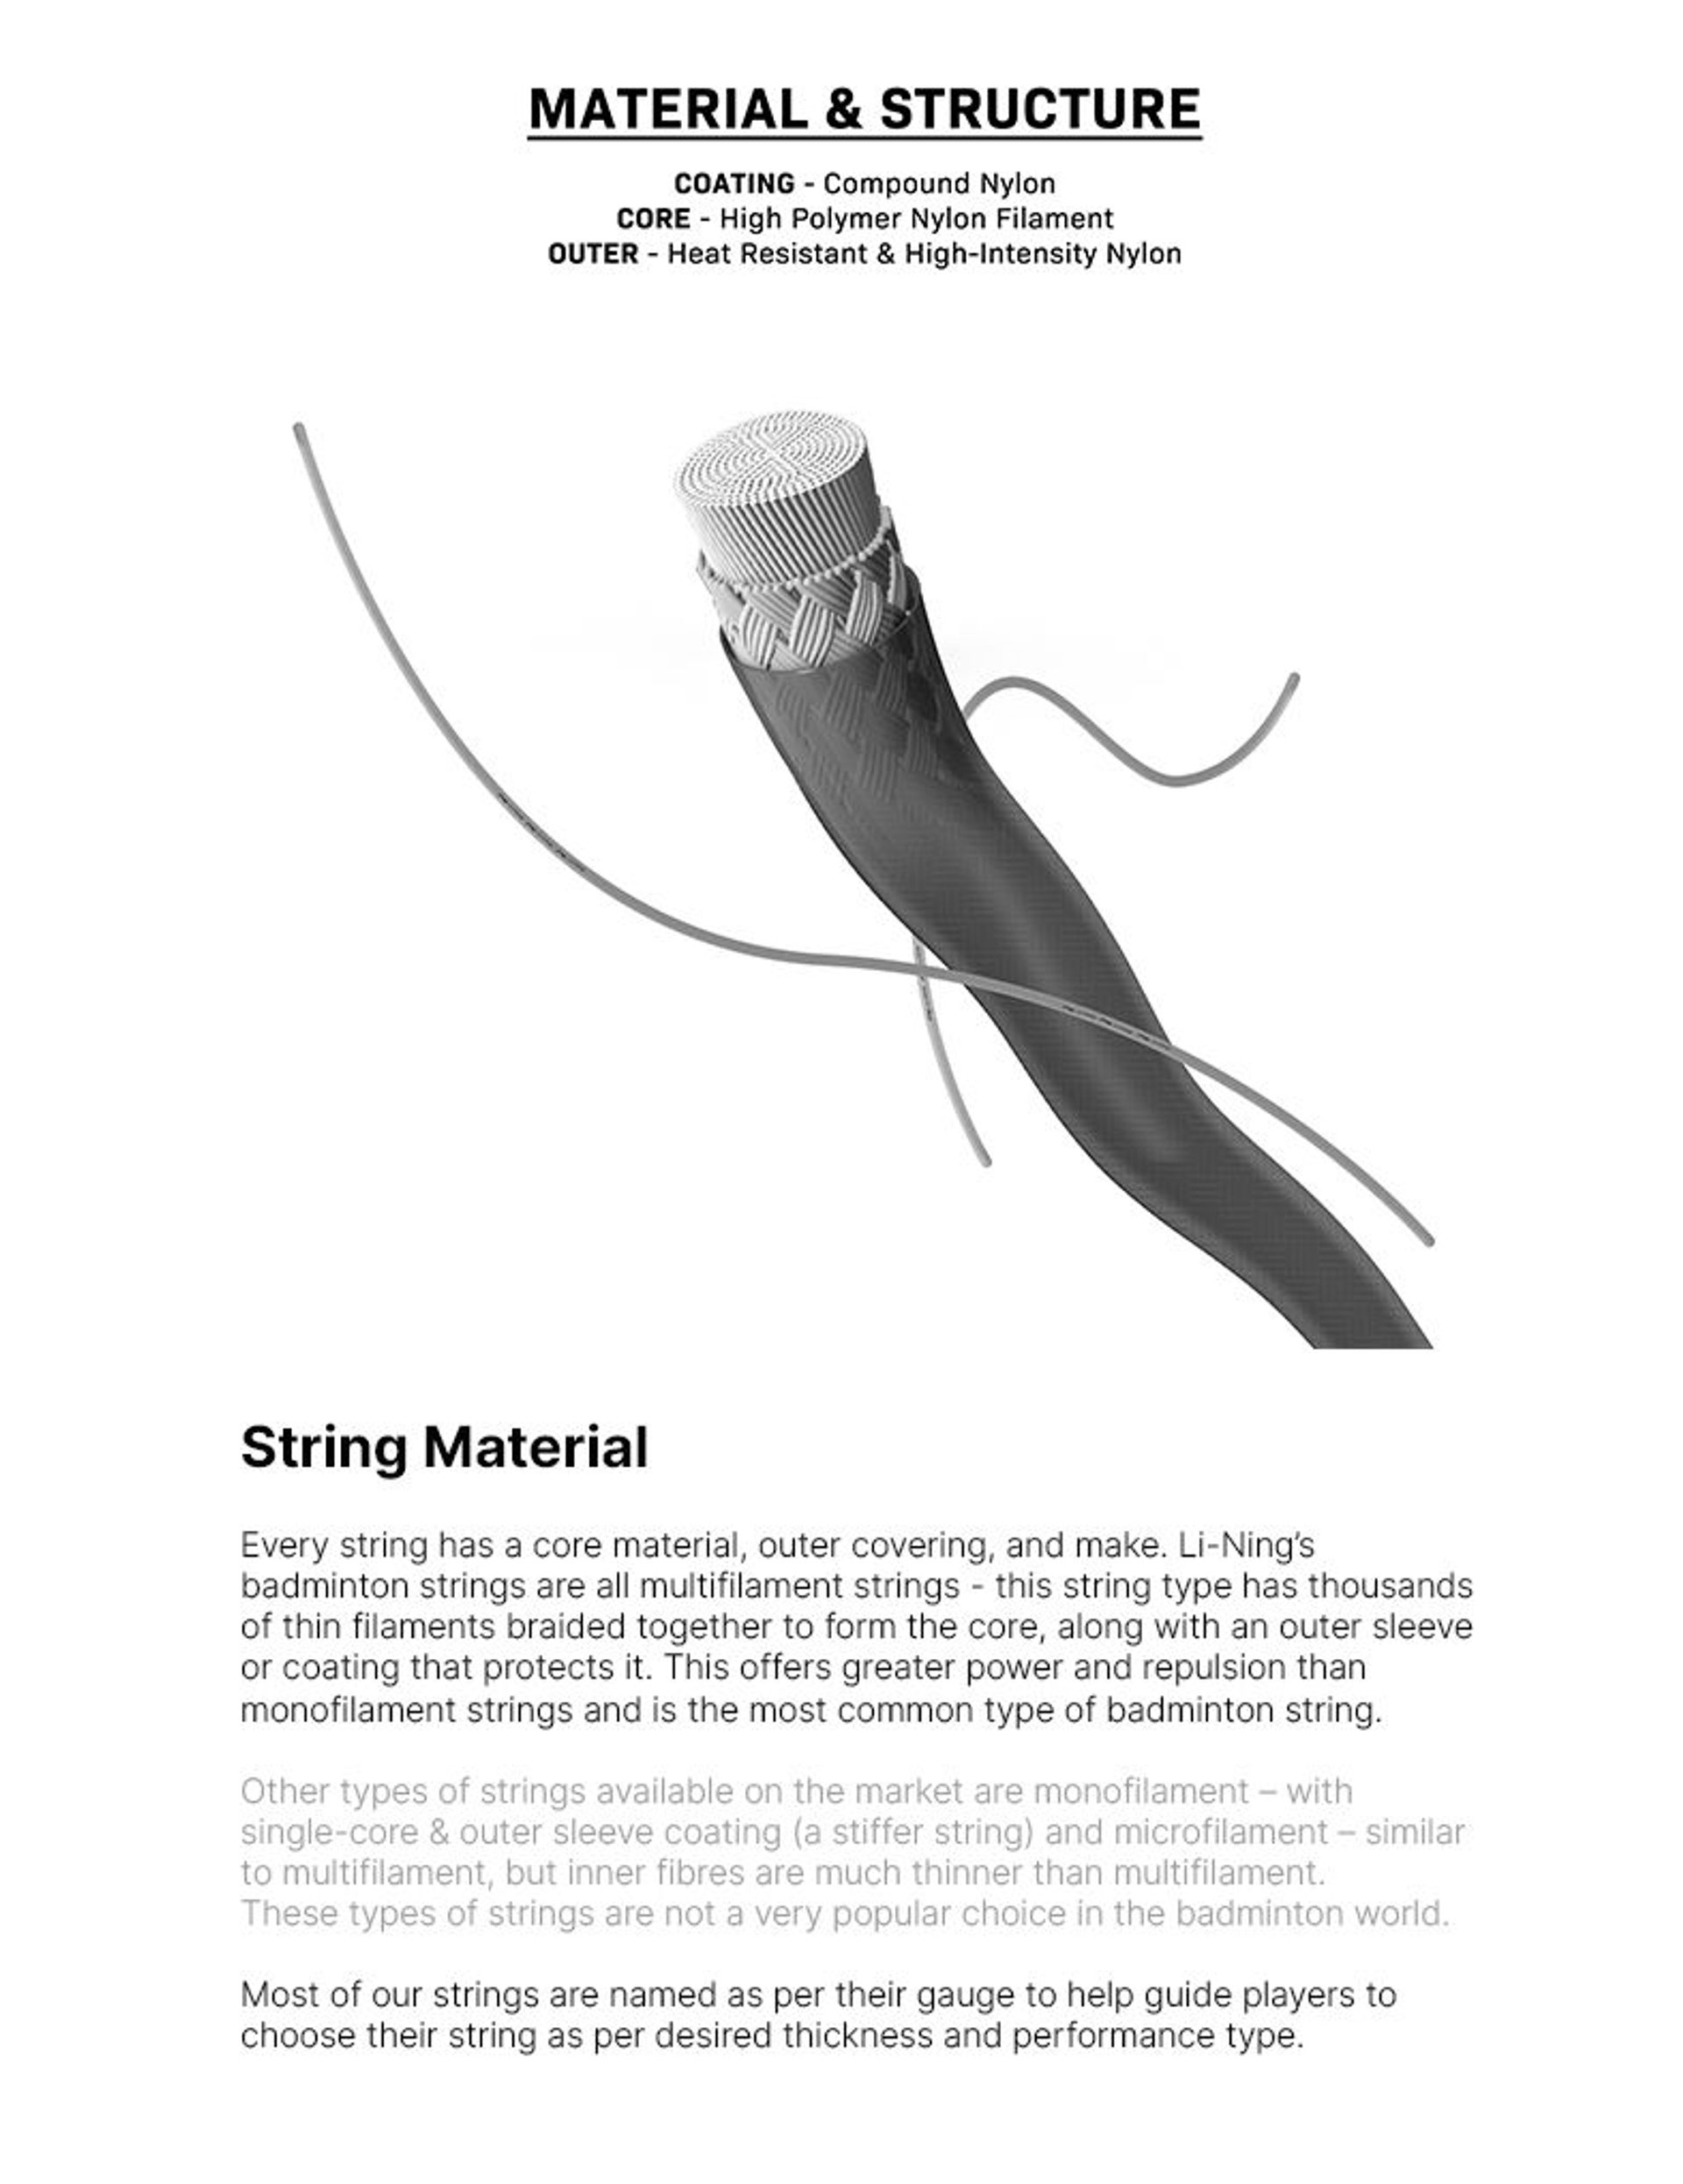 Li-Ning's Multifilament Badminton string structure